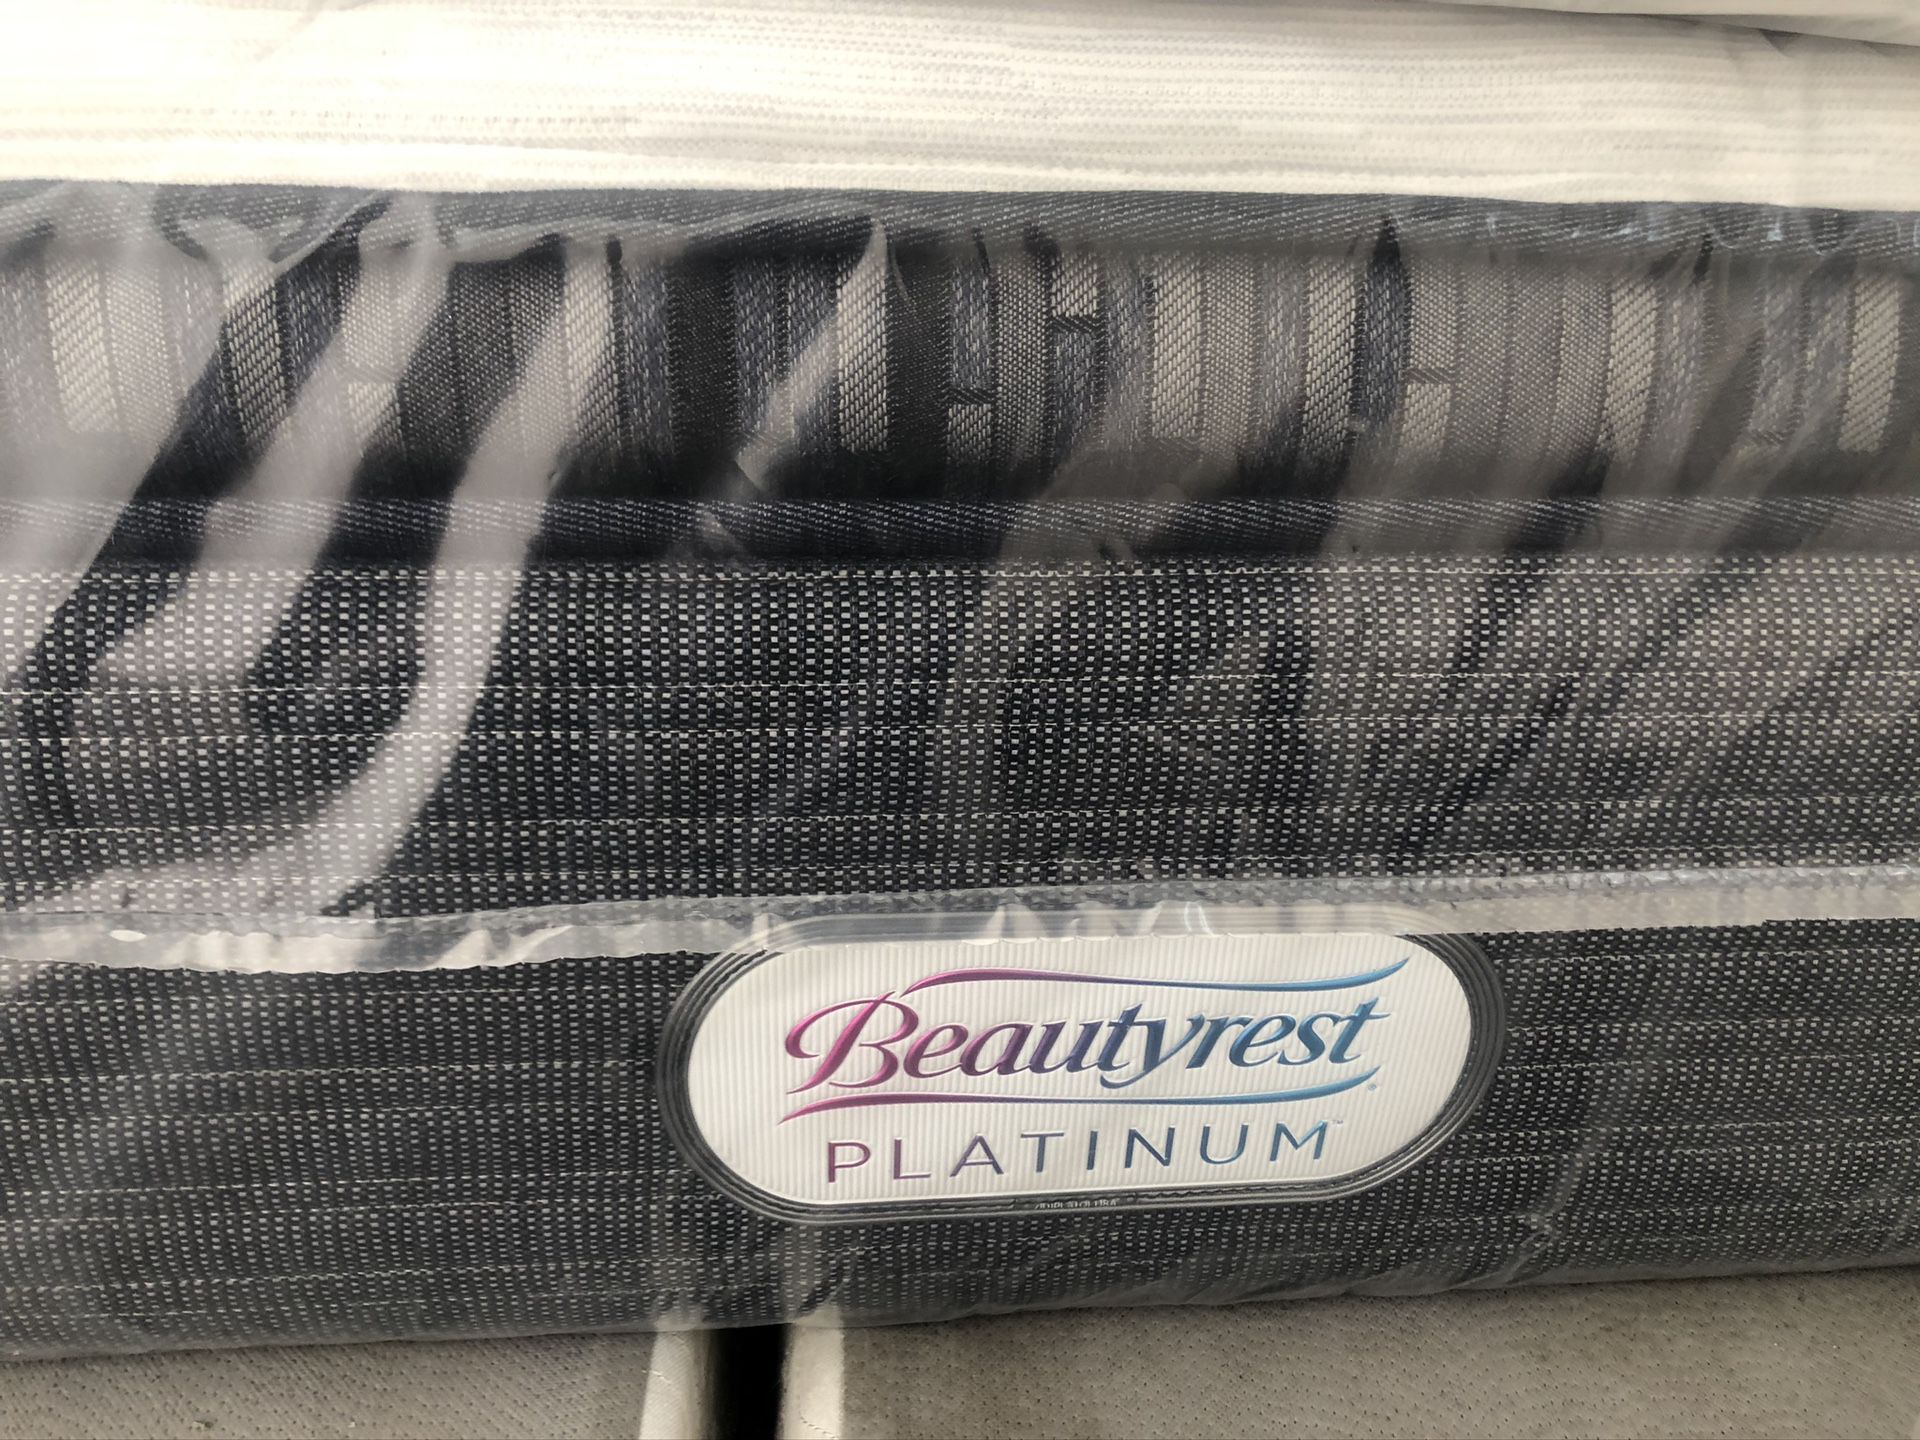 New mattresses